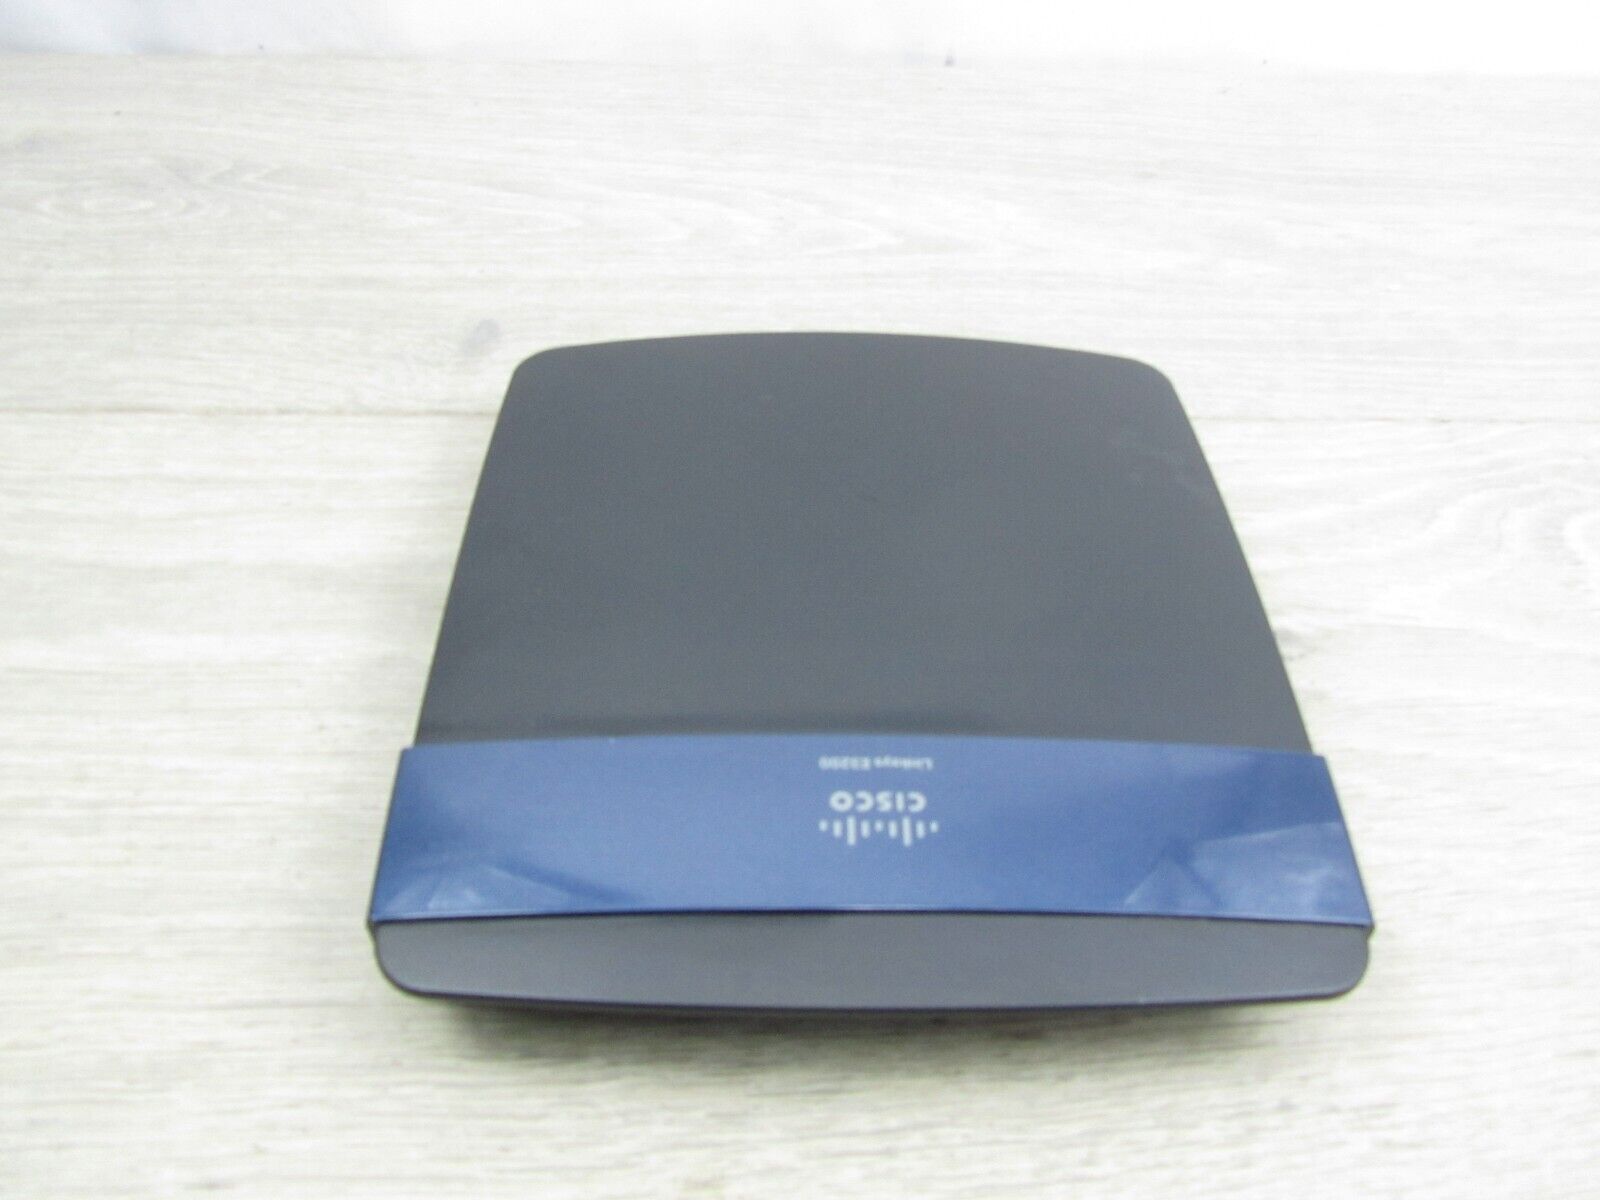 Linksys E3200 300 Mbps 4-Port Ethernet Gigabit Wireless N Router Tested